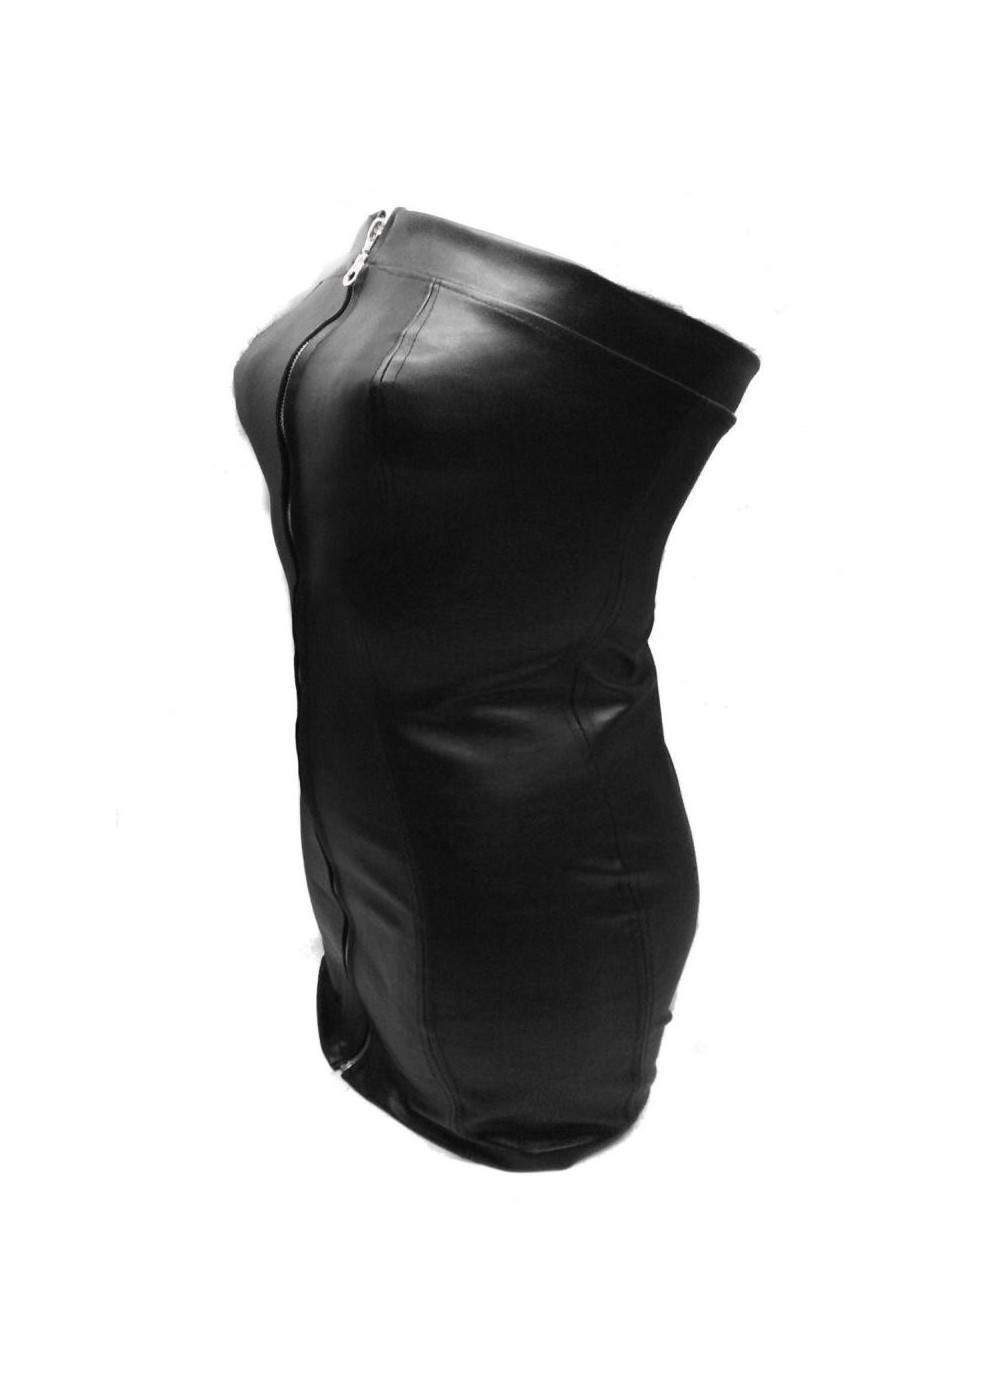 Designer leather dress black size L - XXL (44 - 52) 42,35 € - 